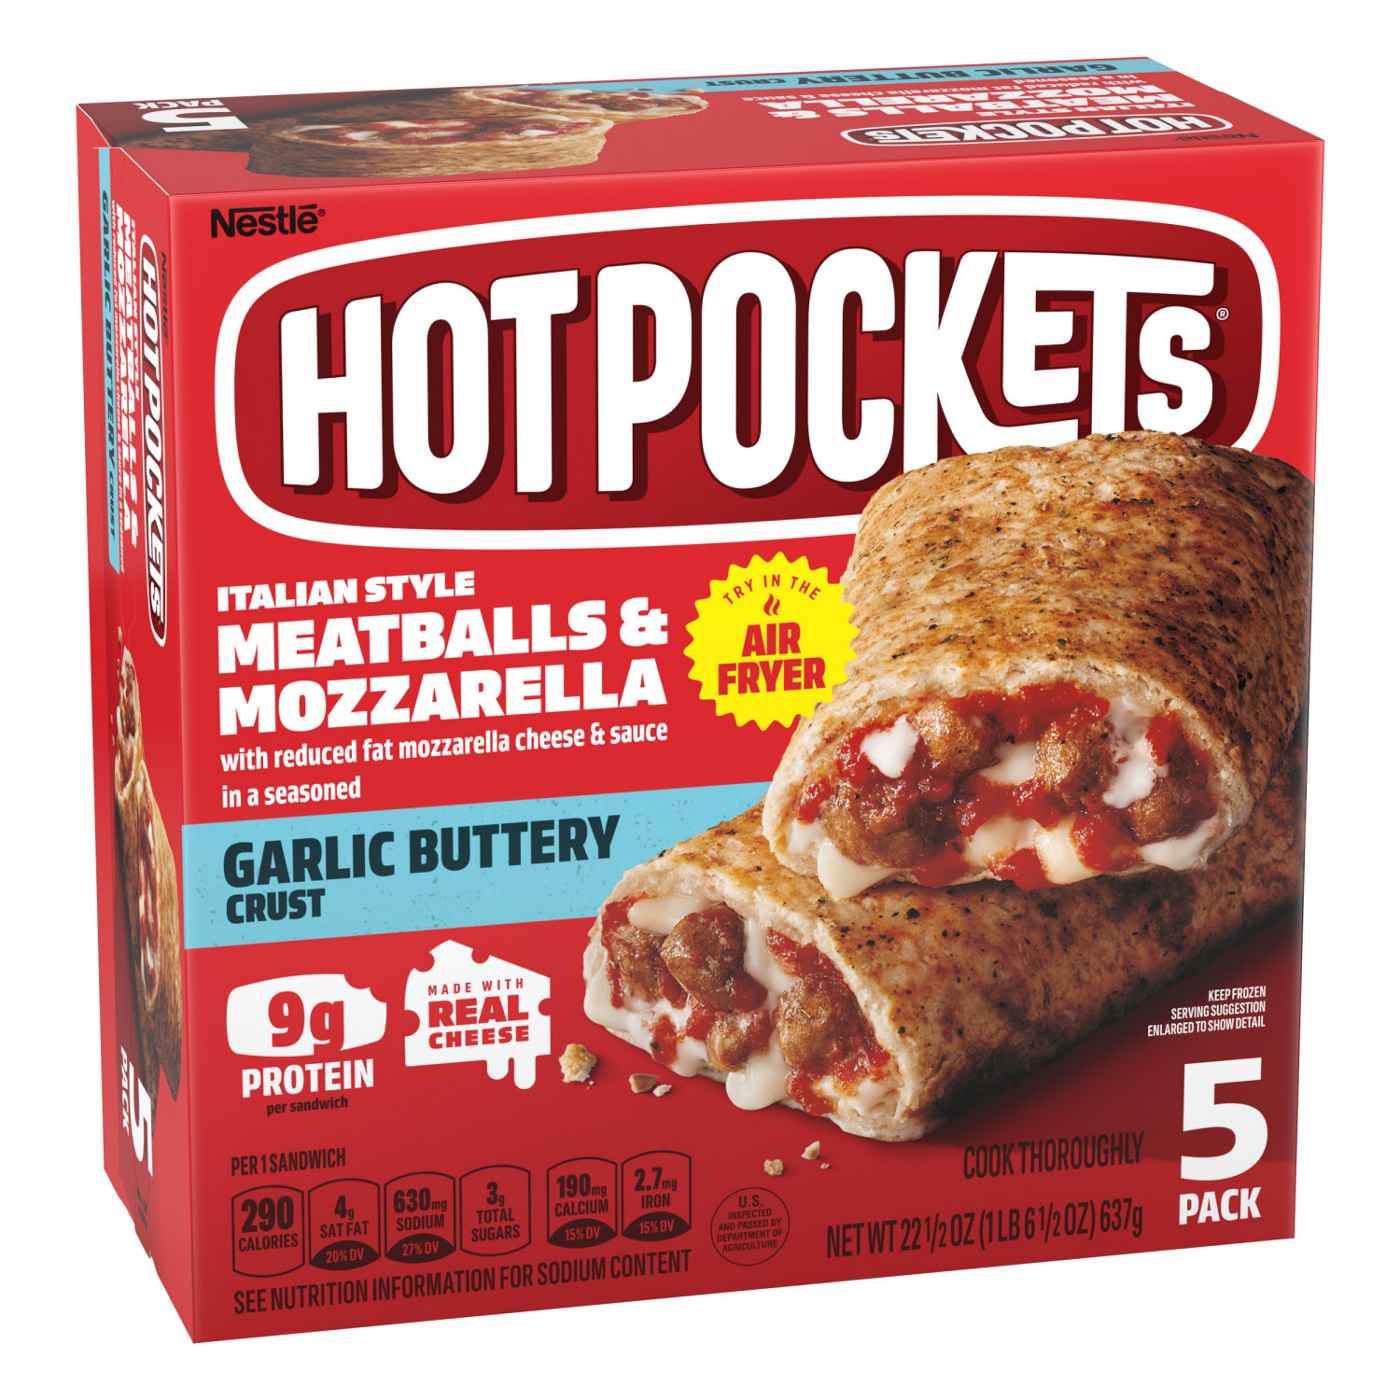 Hot Pockets Italian-Style Meatballs & Mozzarella Frozen Sandwiches - Garlic Buttery Crust; image 3 of 8